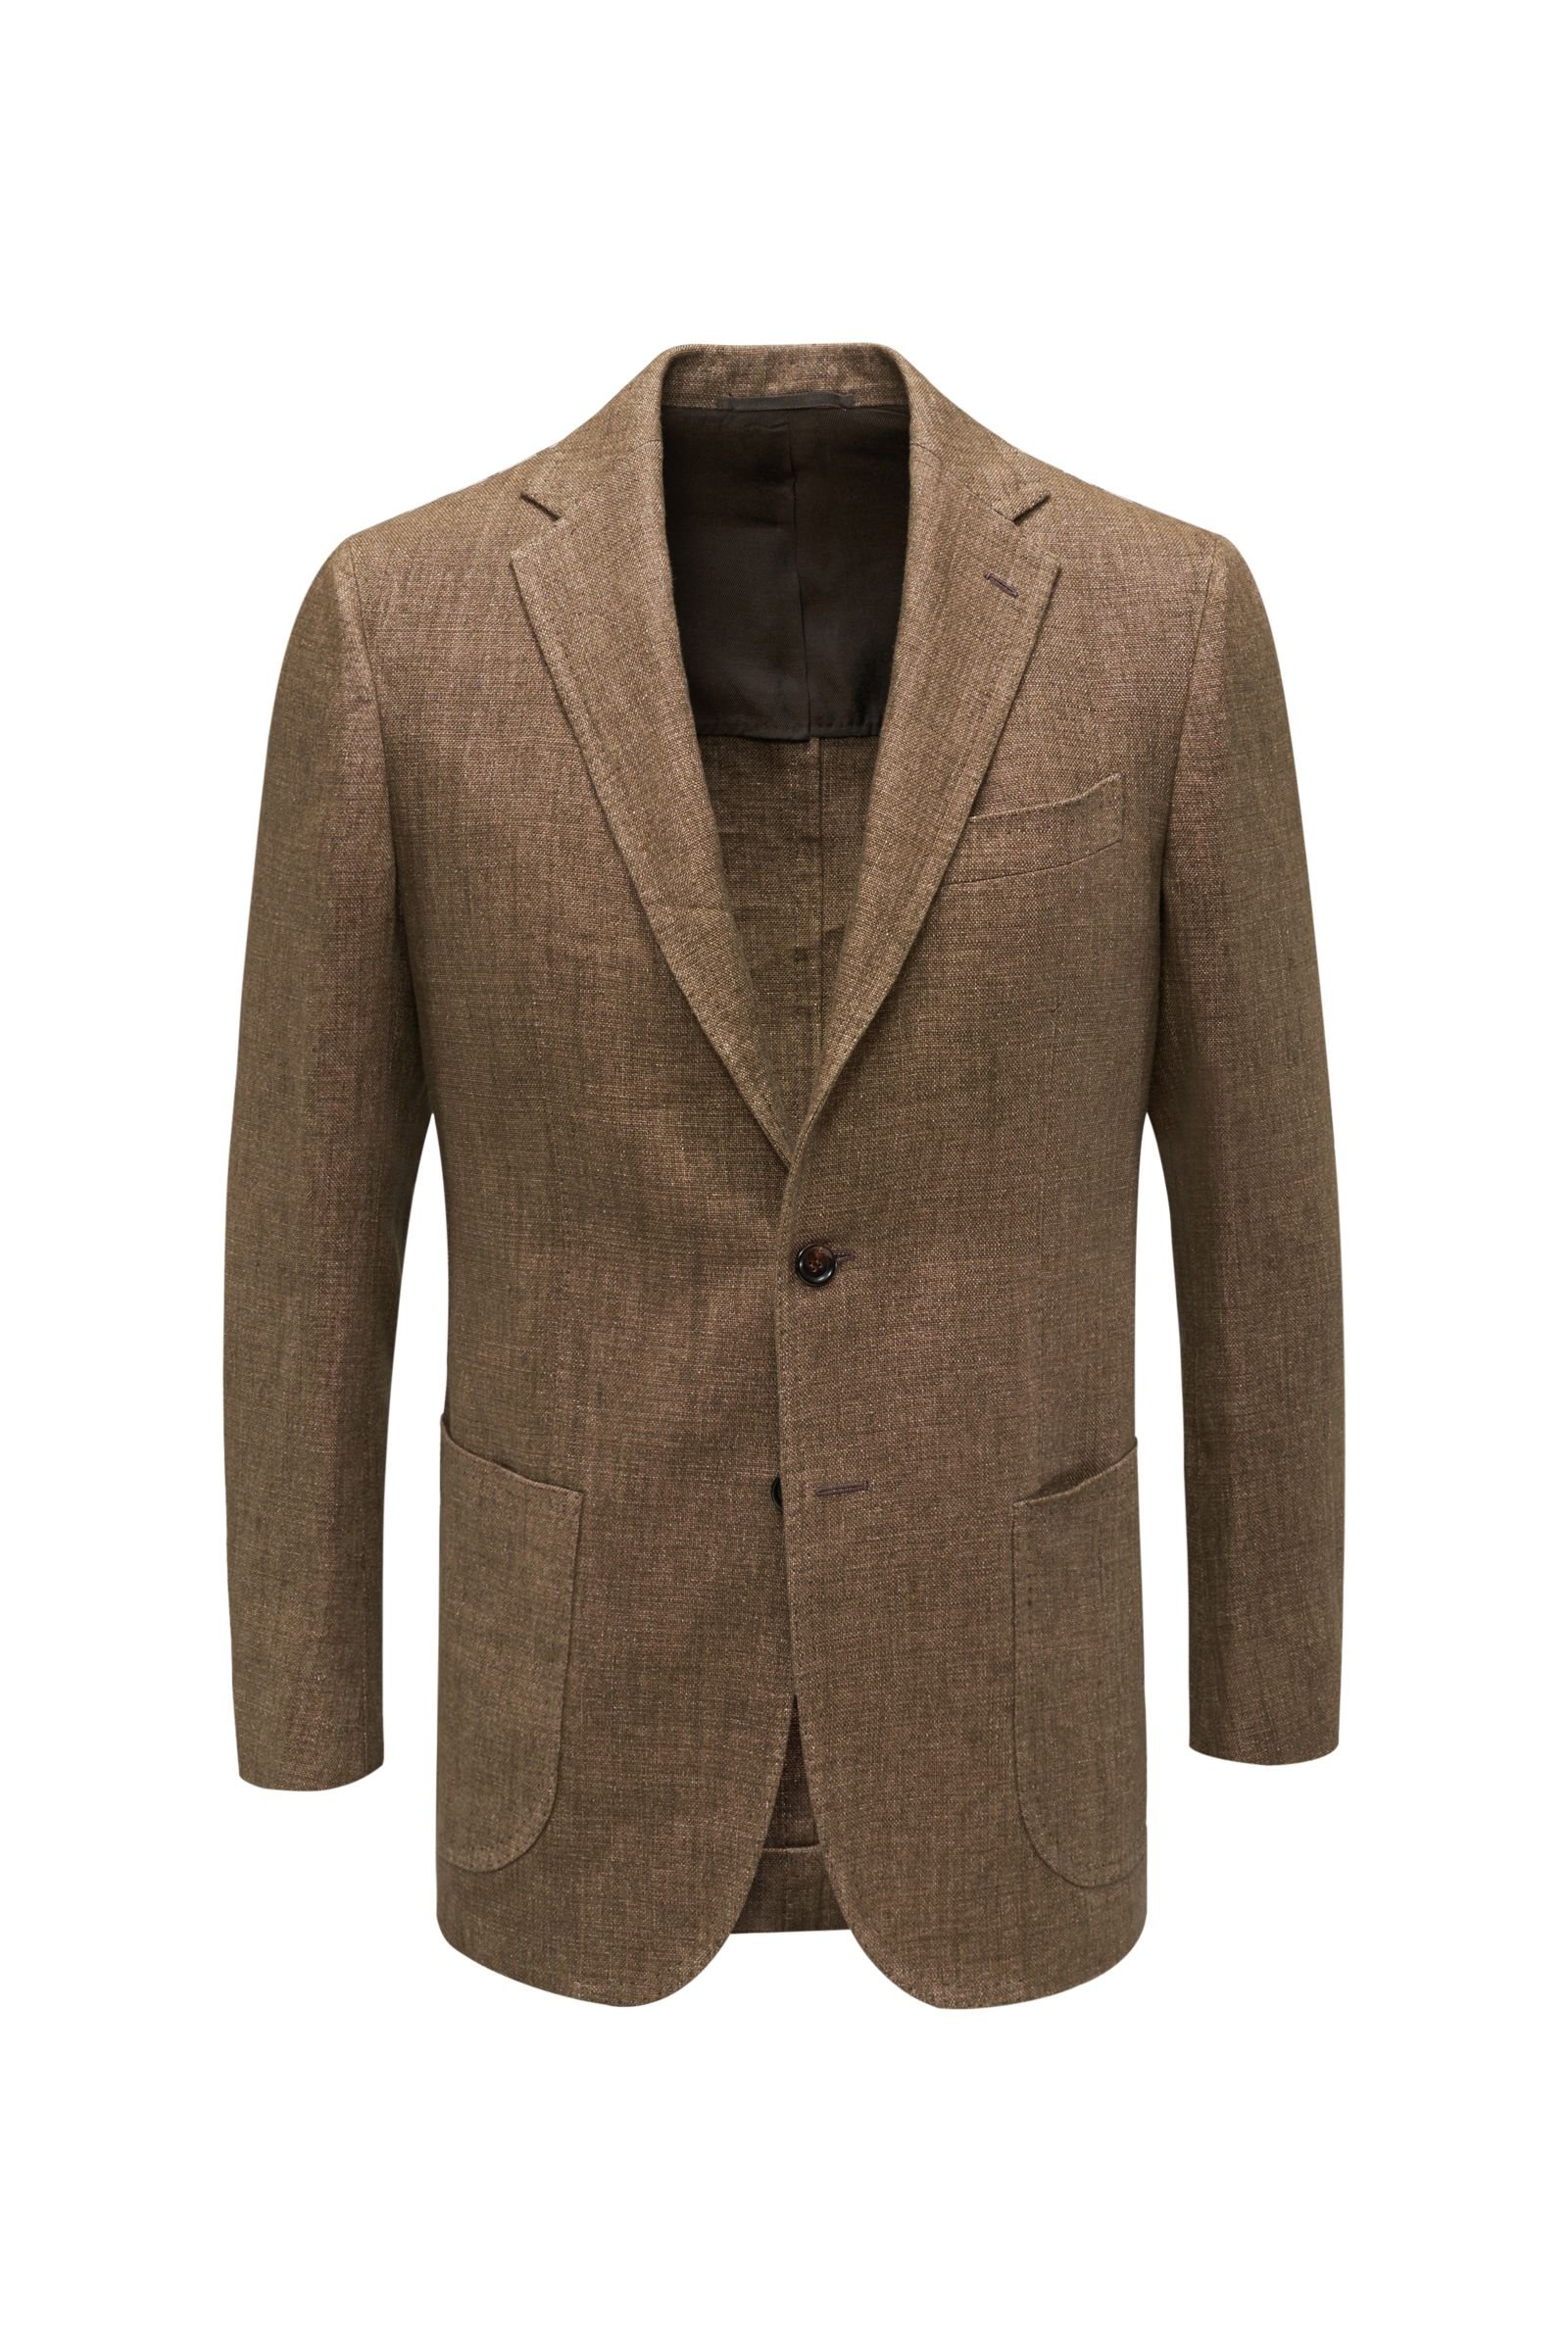 STILE LATINO linen smart-casual jacket brown | BRAUN Hamburg